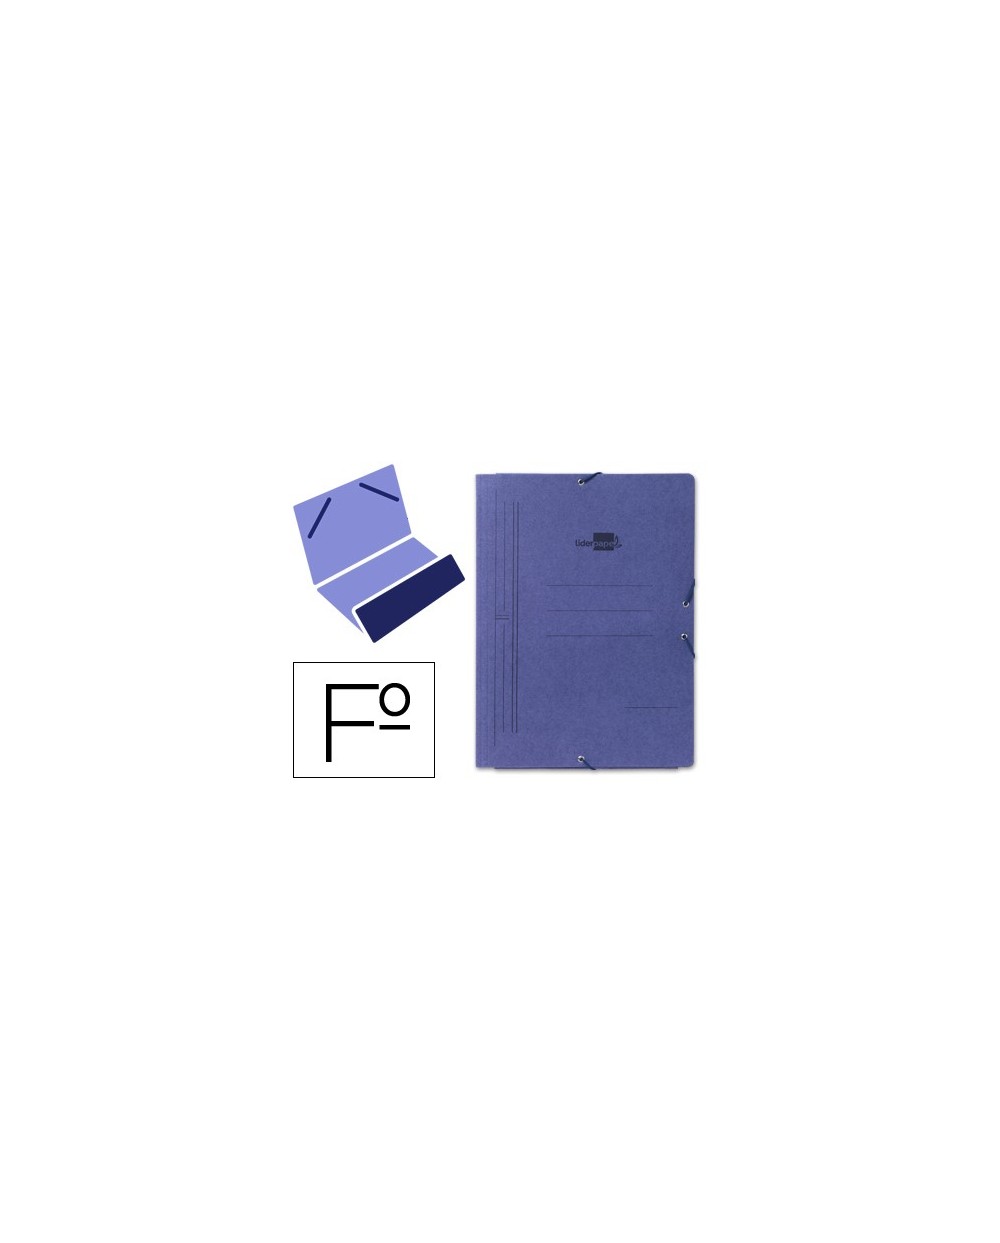 Carpeta liderpapel gomas folio bolsa carton pintado azul